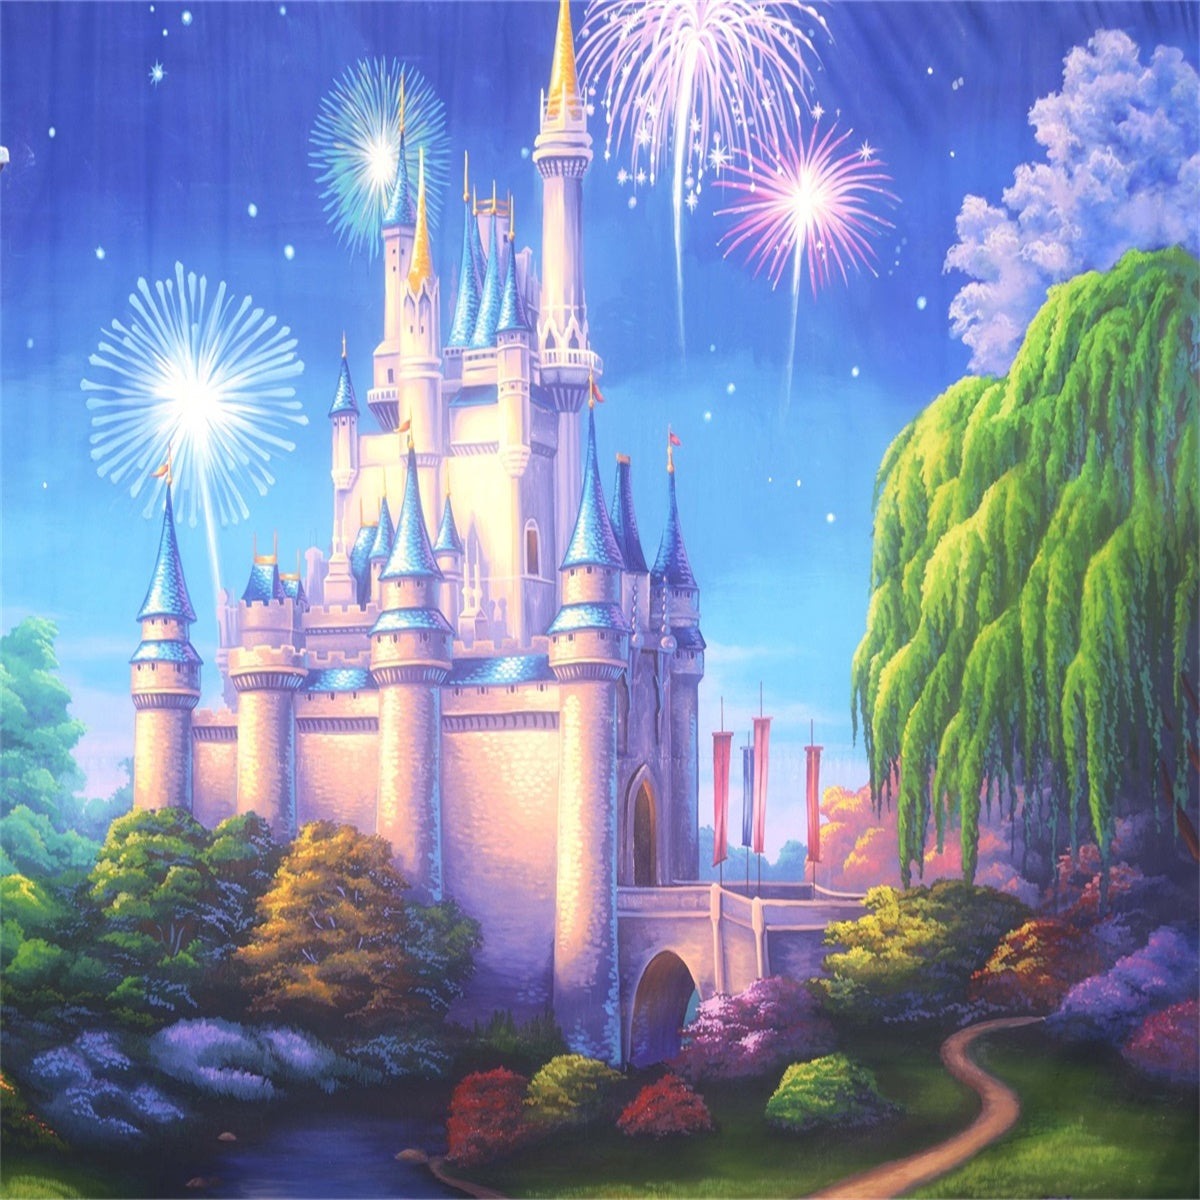 Castle Cartoon Fairy Tale Baby Show Backdrops